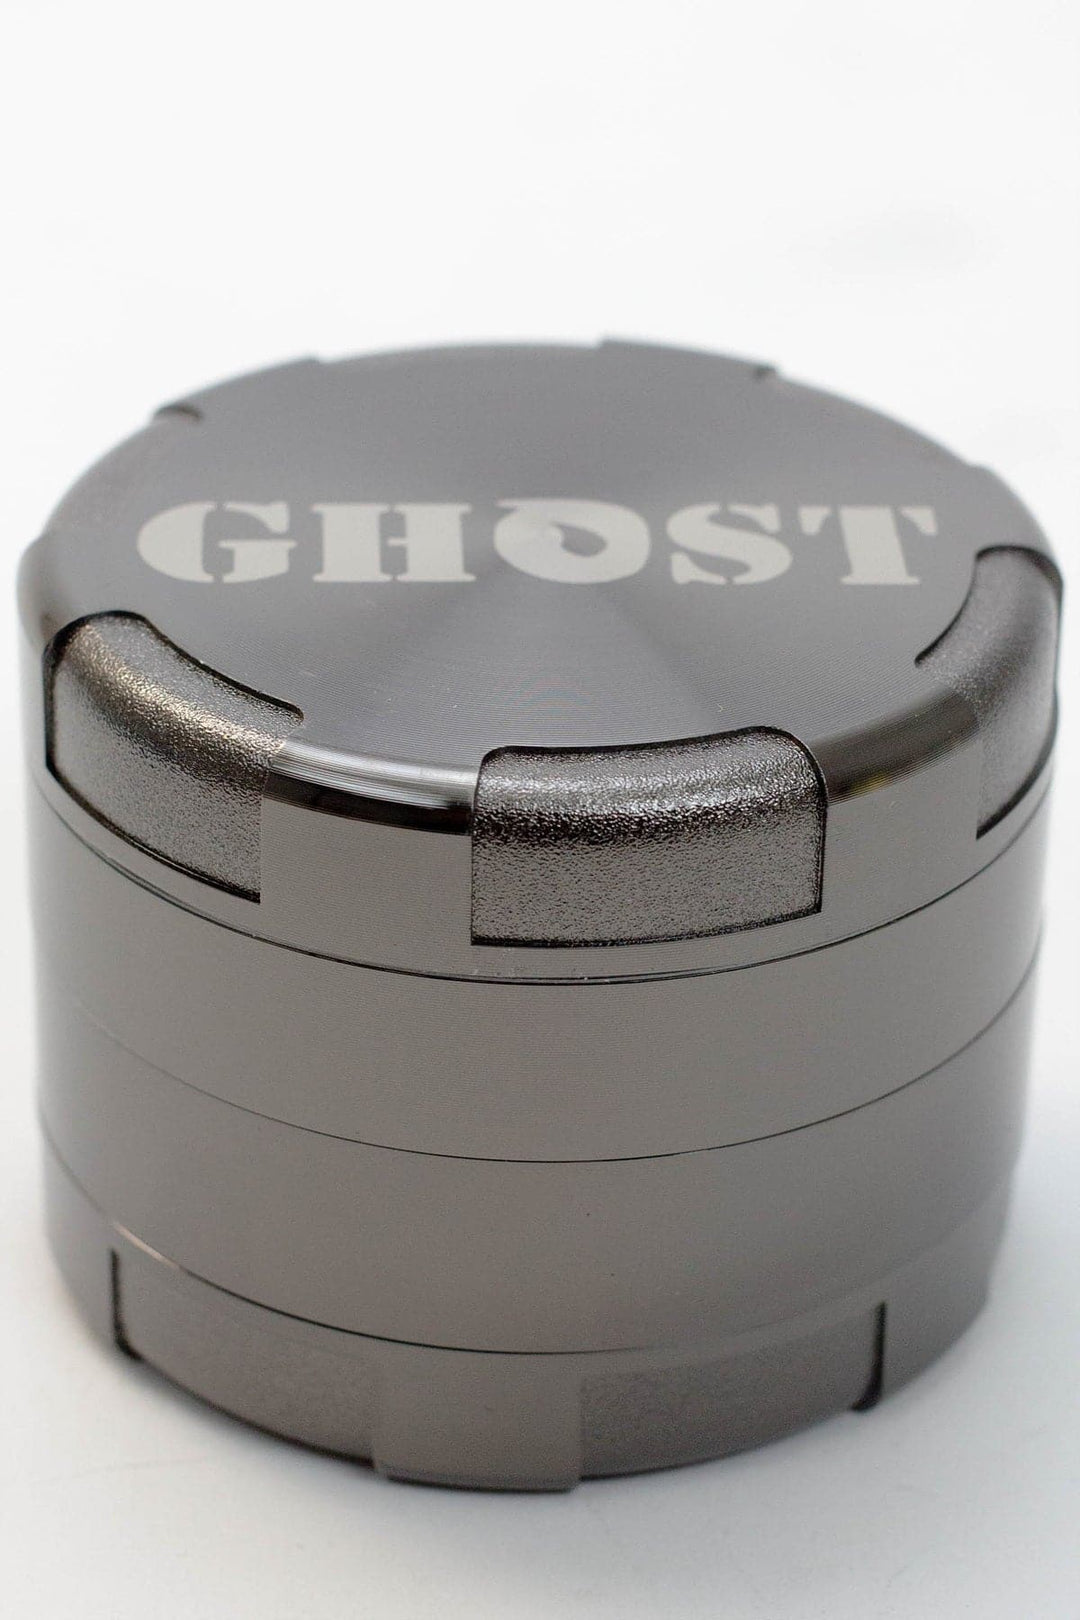 Ghost 4 Parts Large herb grinder_9